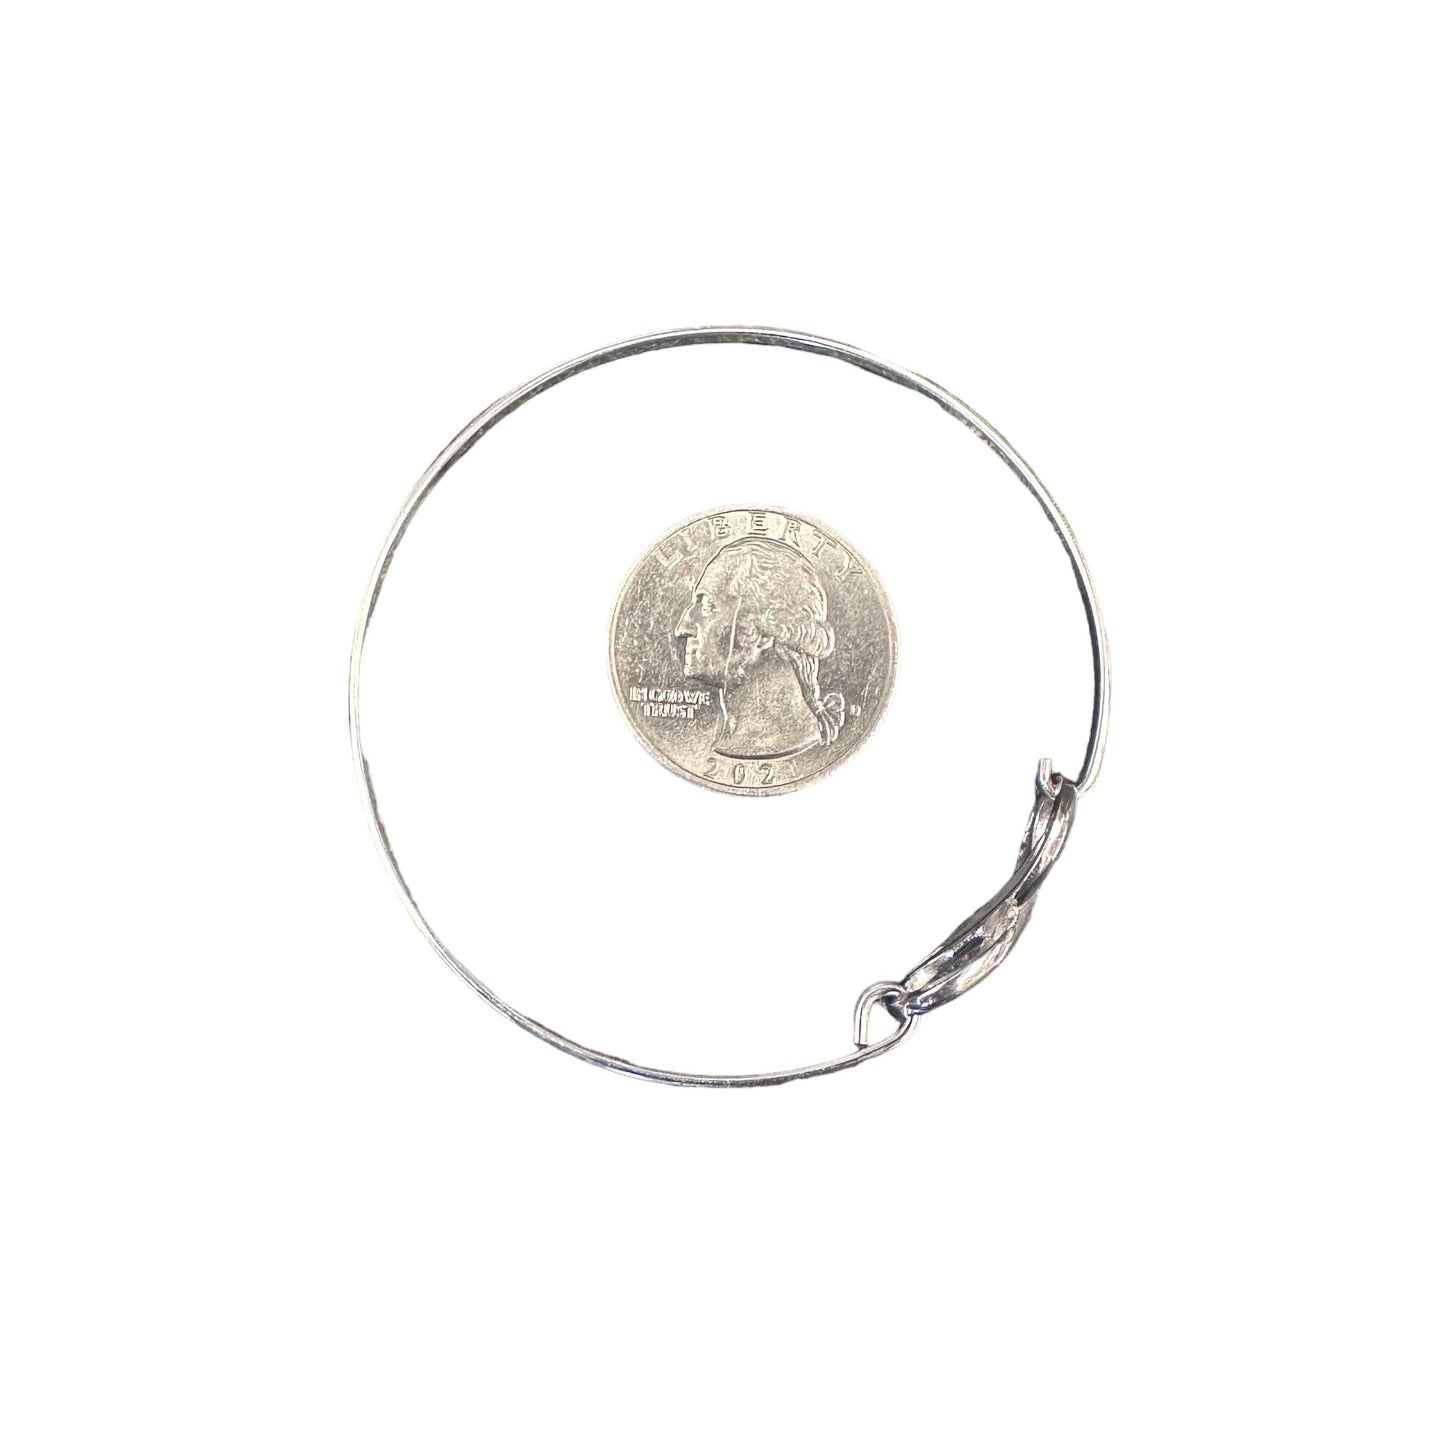 Infinity Latch Bangle Bracelet 7/16" Wide Sterling Silver